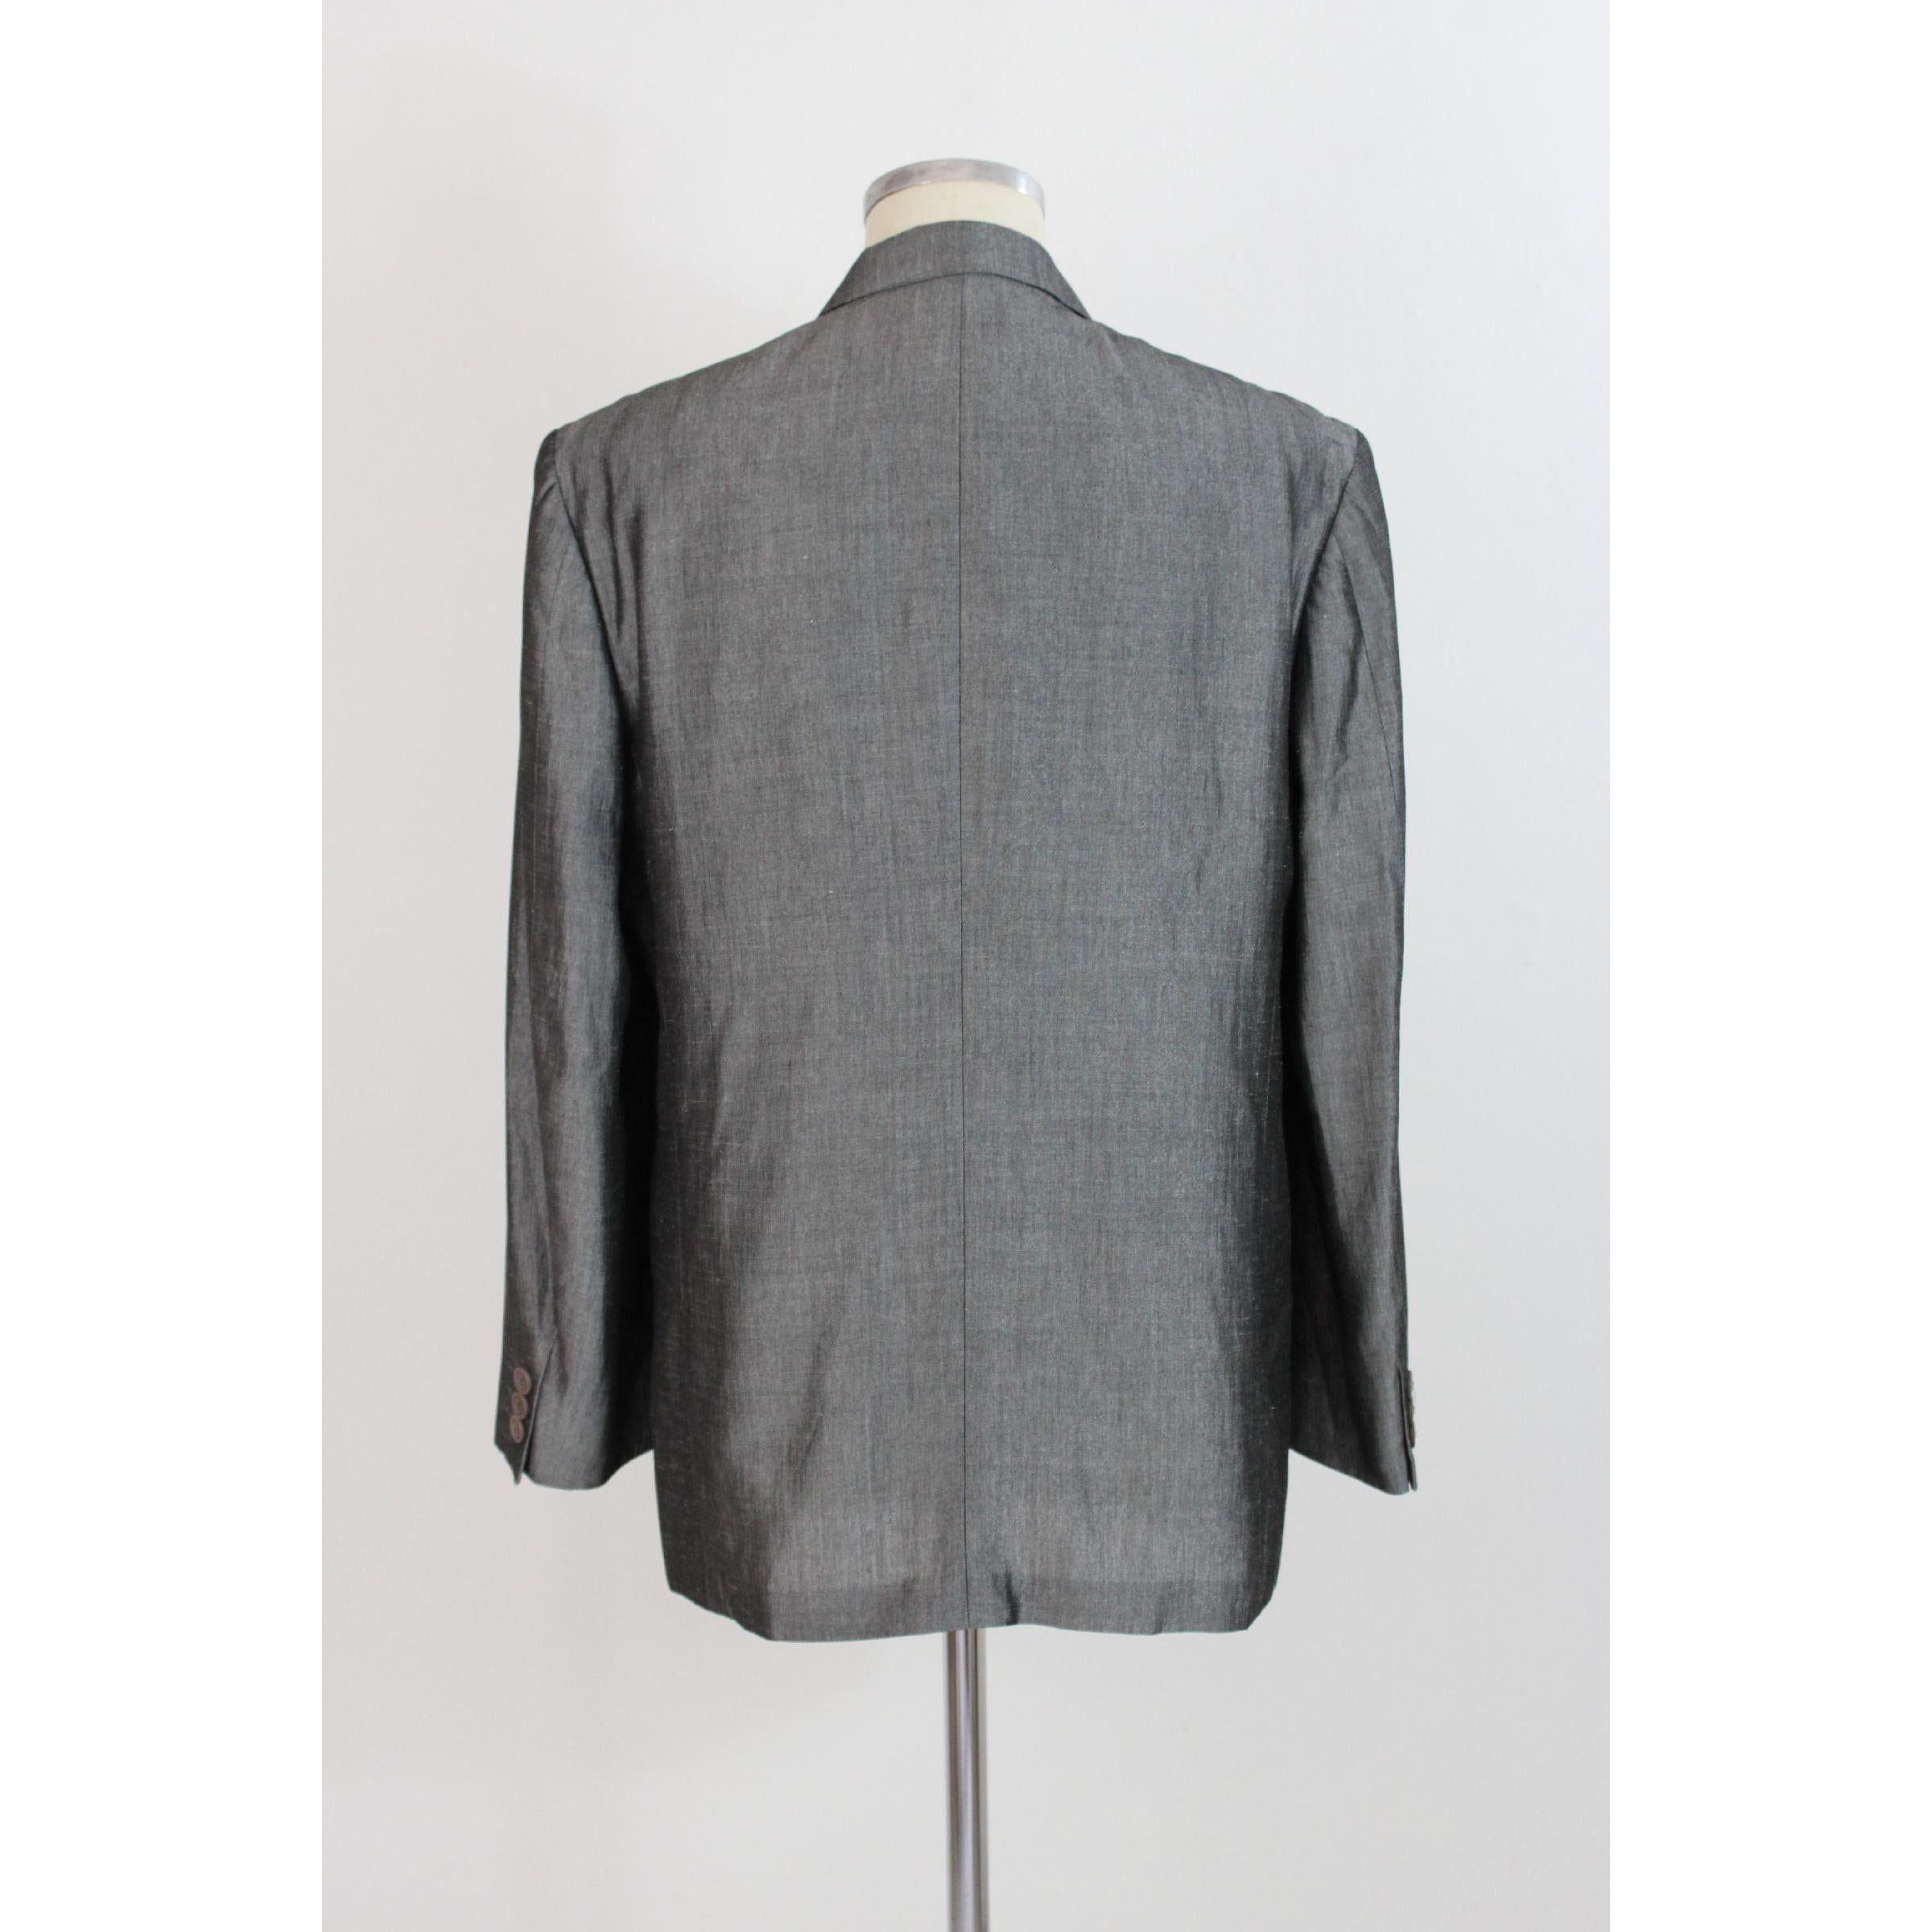 Men's 1990s Gianni Versace Vintage Pants Suit Gray Linen Set Jacket Waistcoat